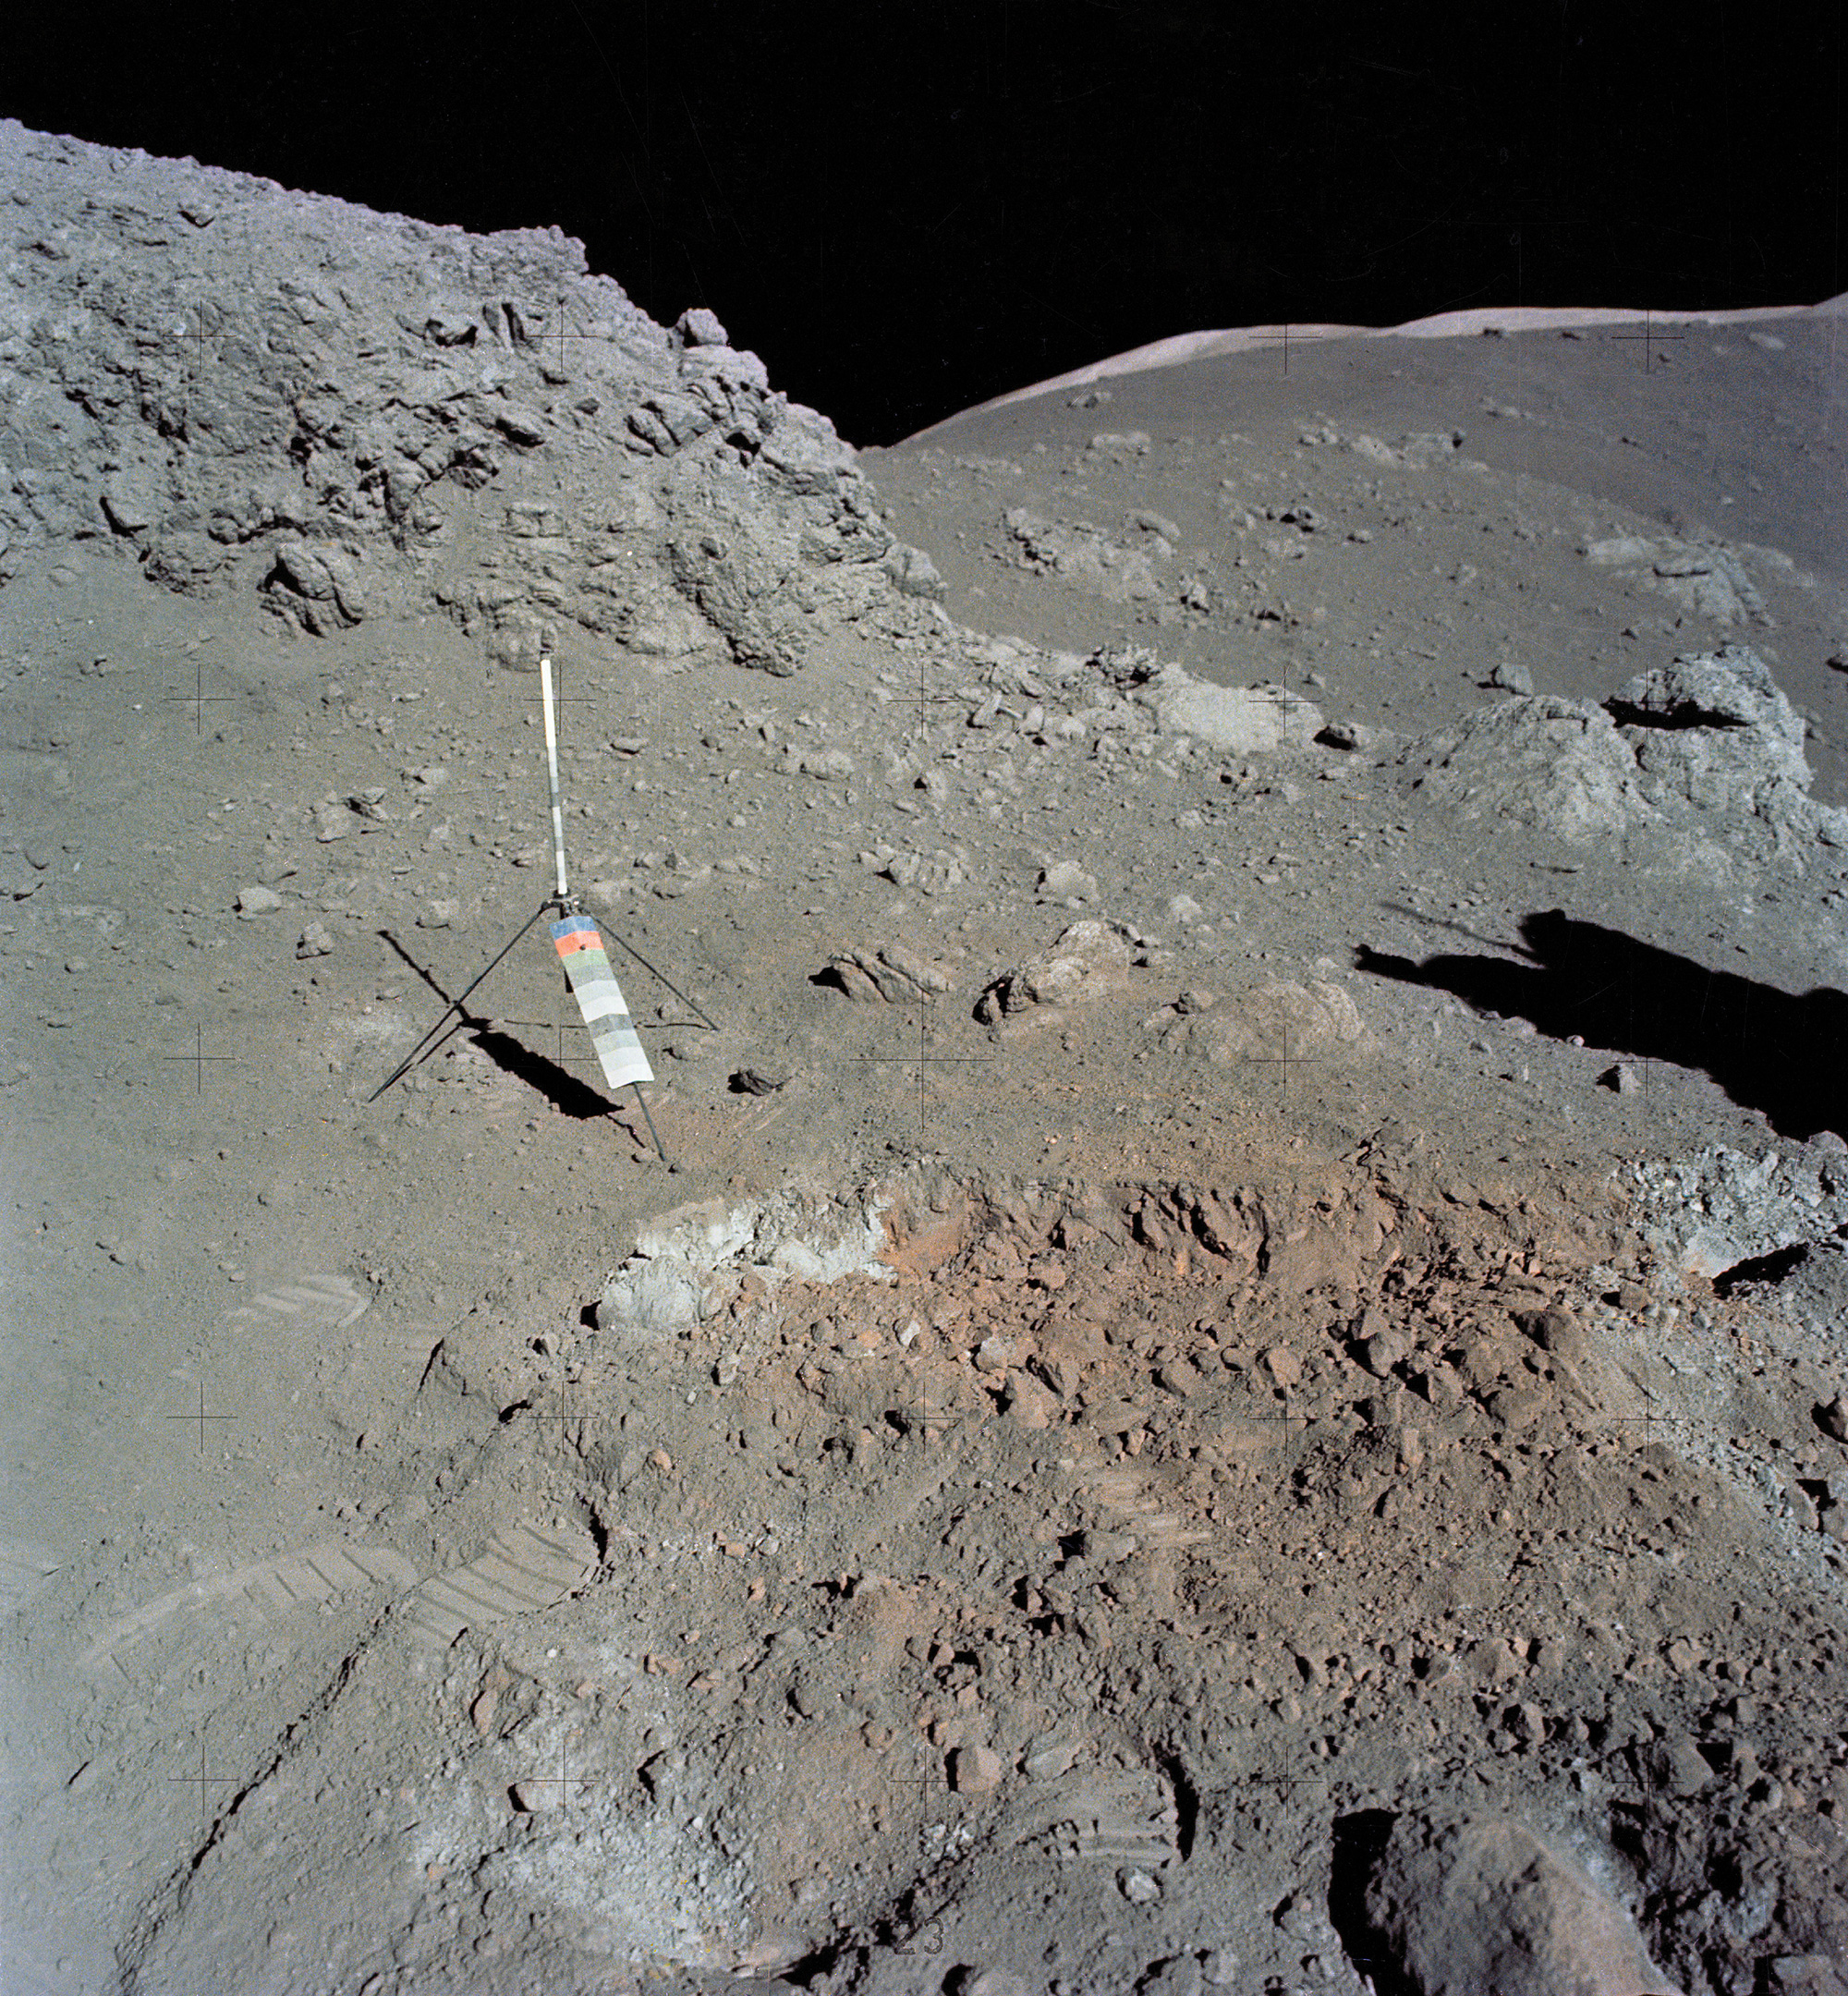 Harrison Schmitt discovered the ‘orange soil’ on the Moon shown above. Photo: NASA